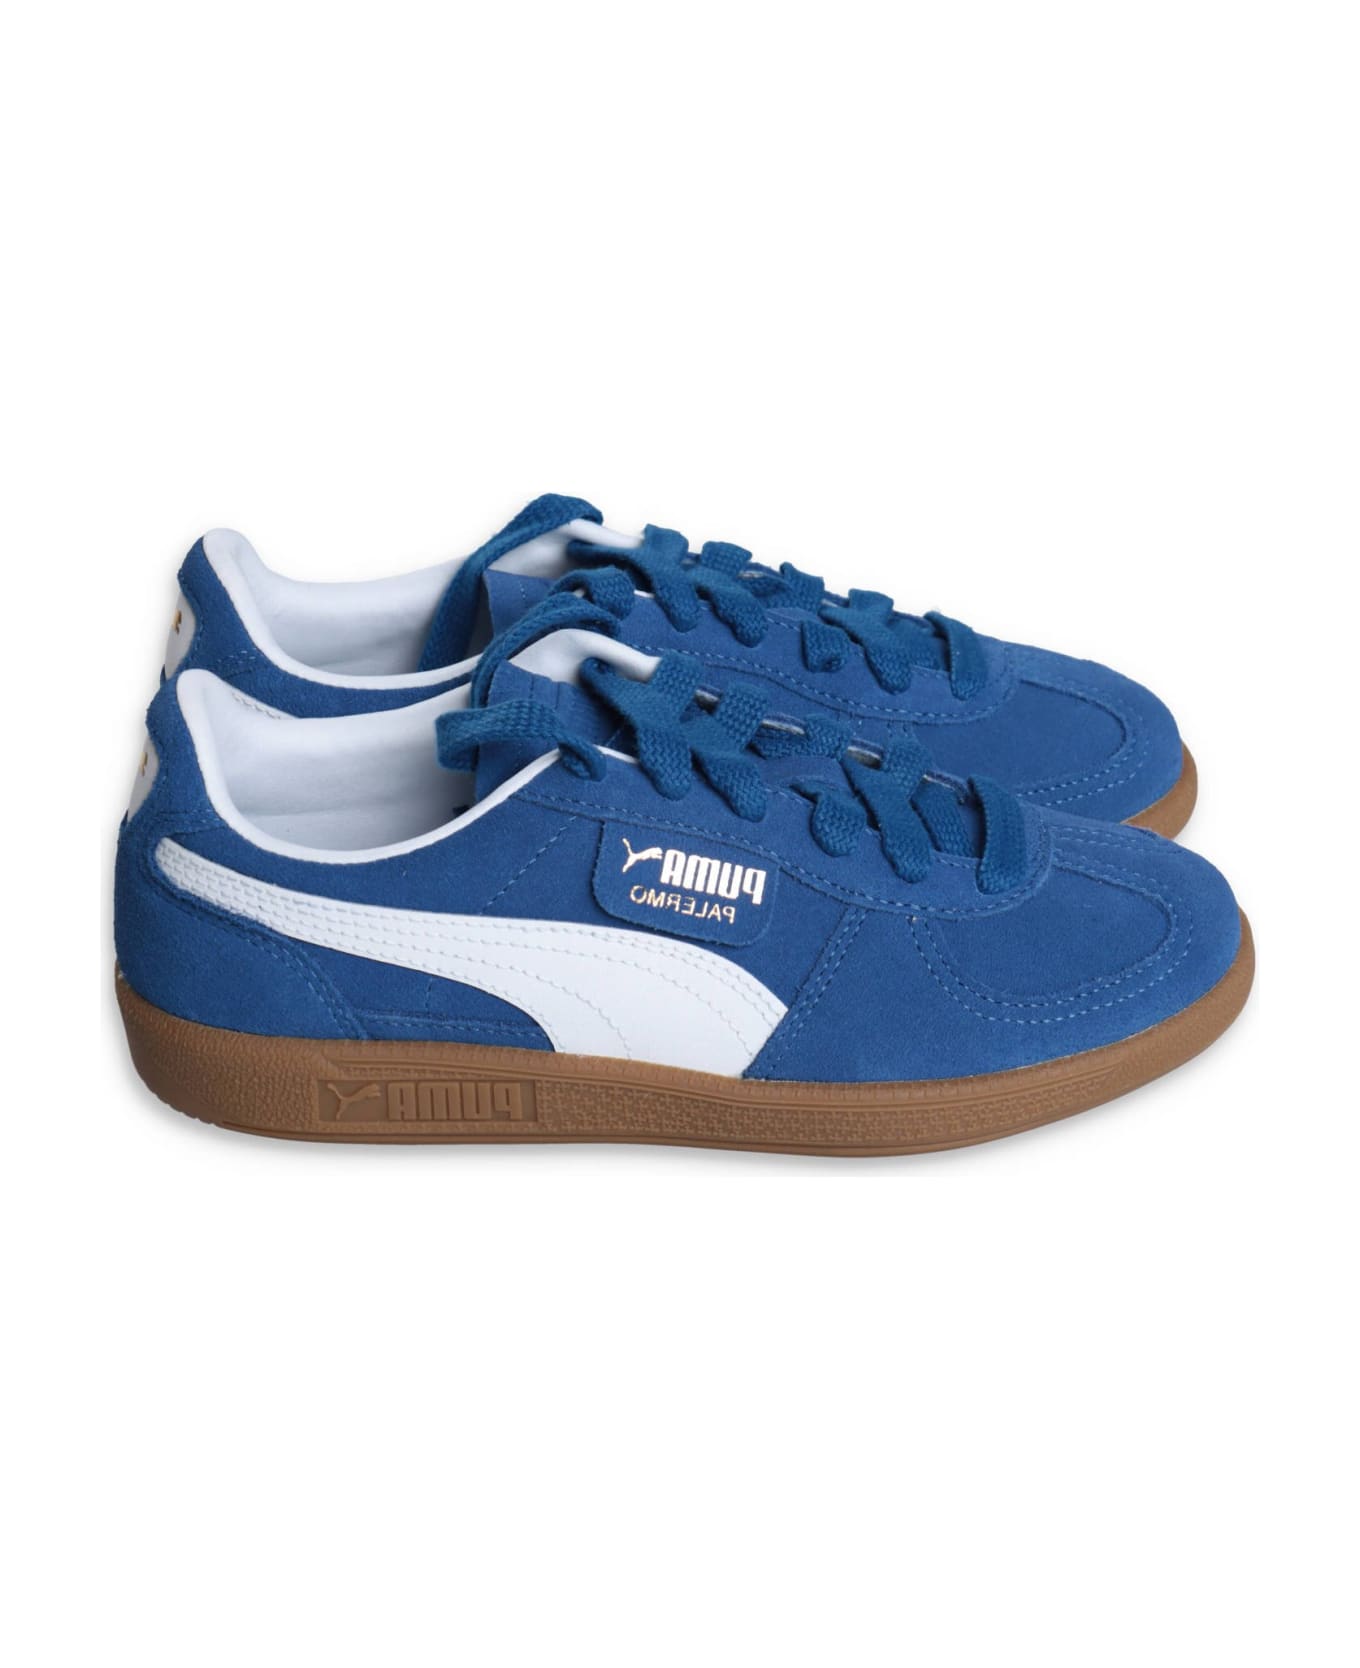 Puma Sneakers Blu Royal In Pelle Scamosciata Bambino - Blu